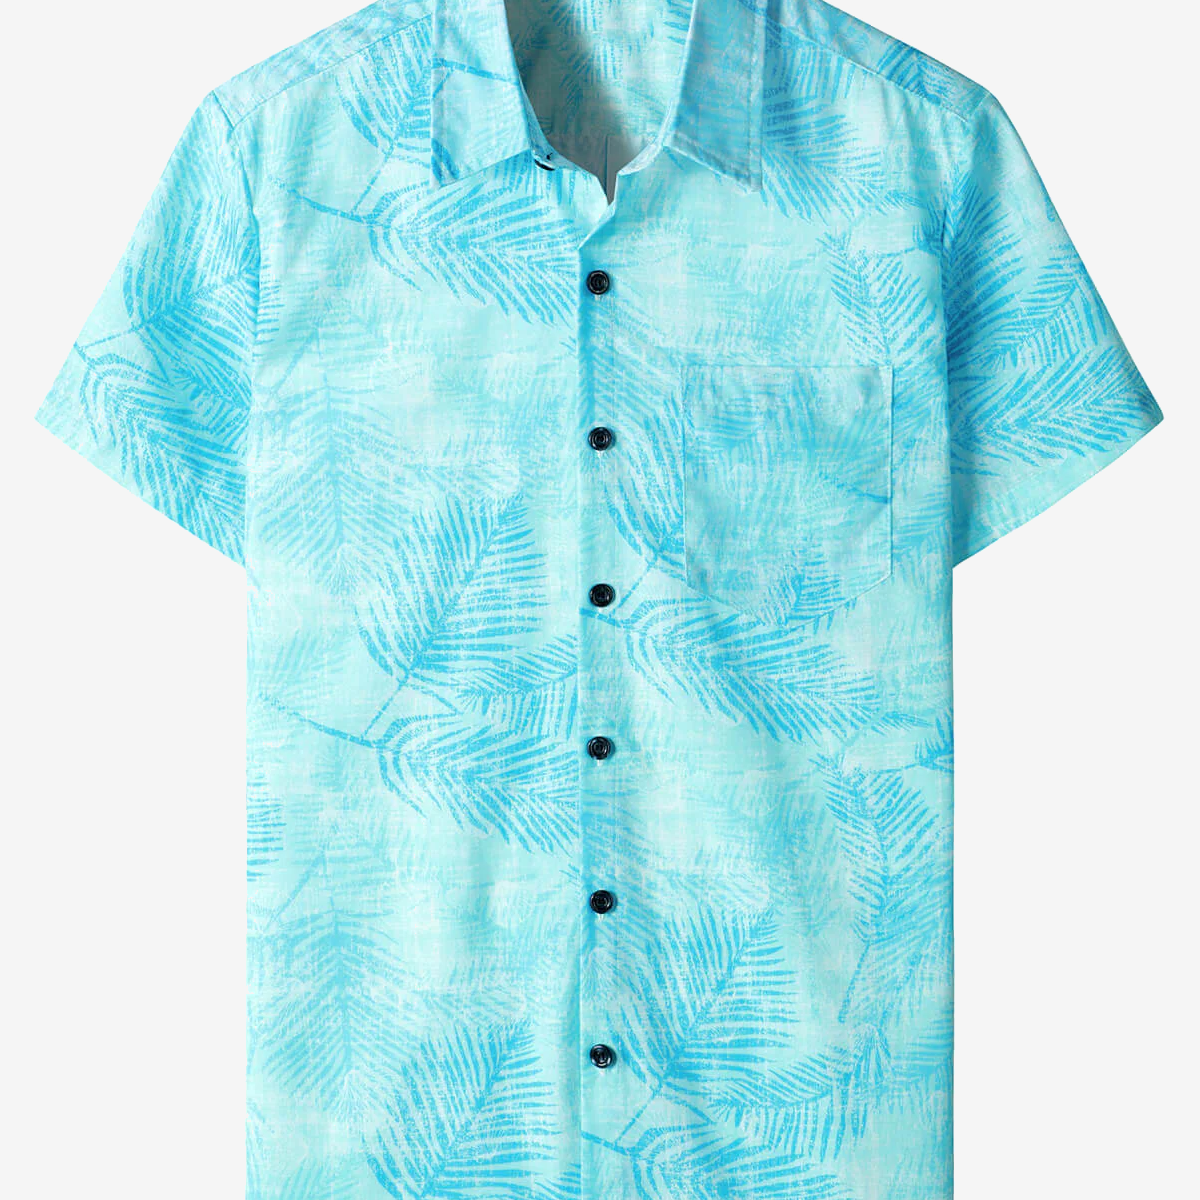 Chemise à Manches Courtes Homme Bleu Clair Imprimé Tropical Beach Holiday Pocke